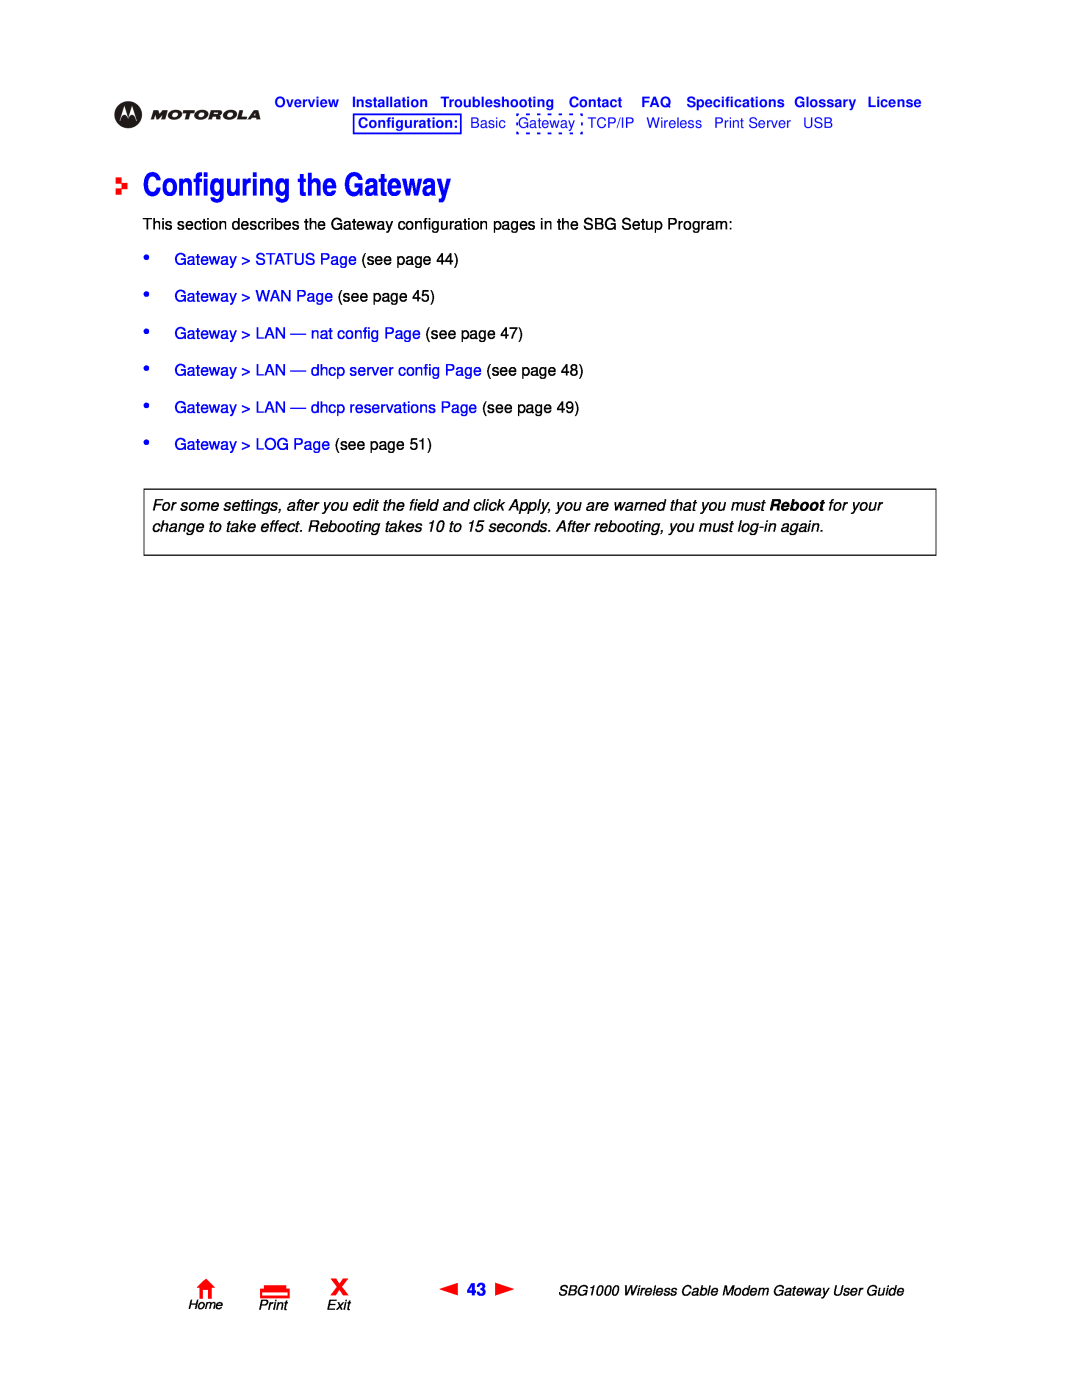 Motorola SBG1000 manual Configuring the Gateway, Gateway STATUS Page see page Gateway WAN Page see page, Home Print Exit 